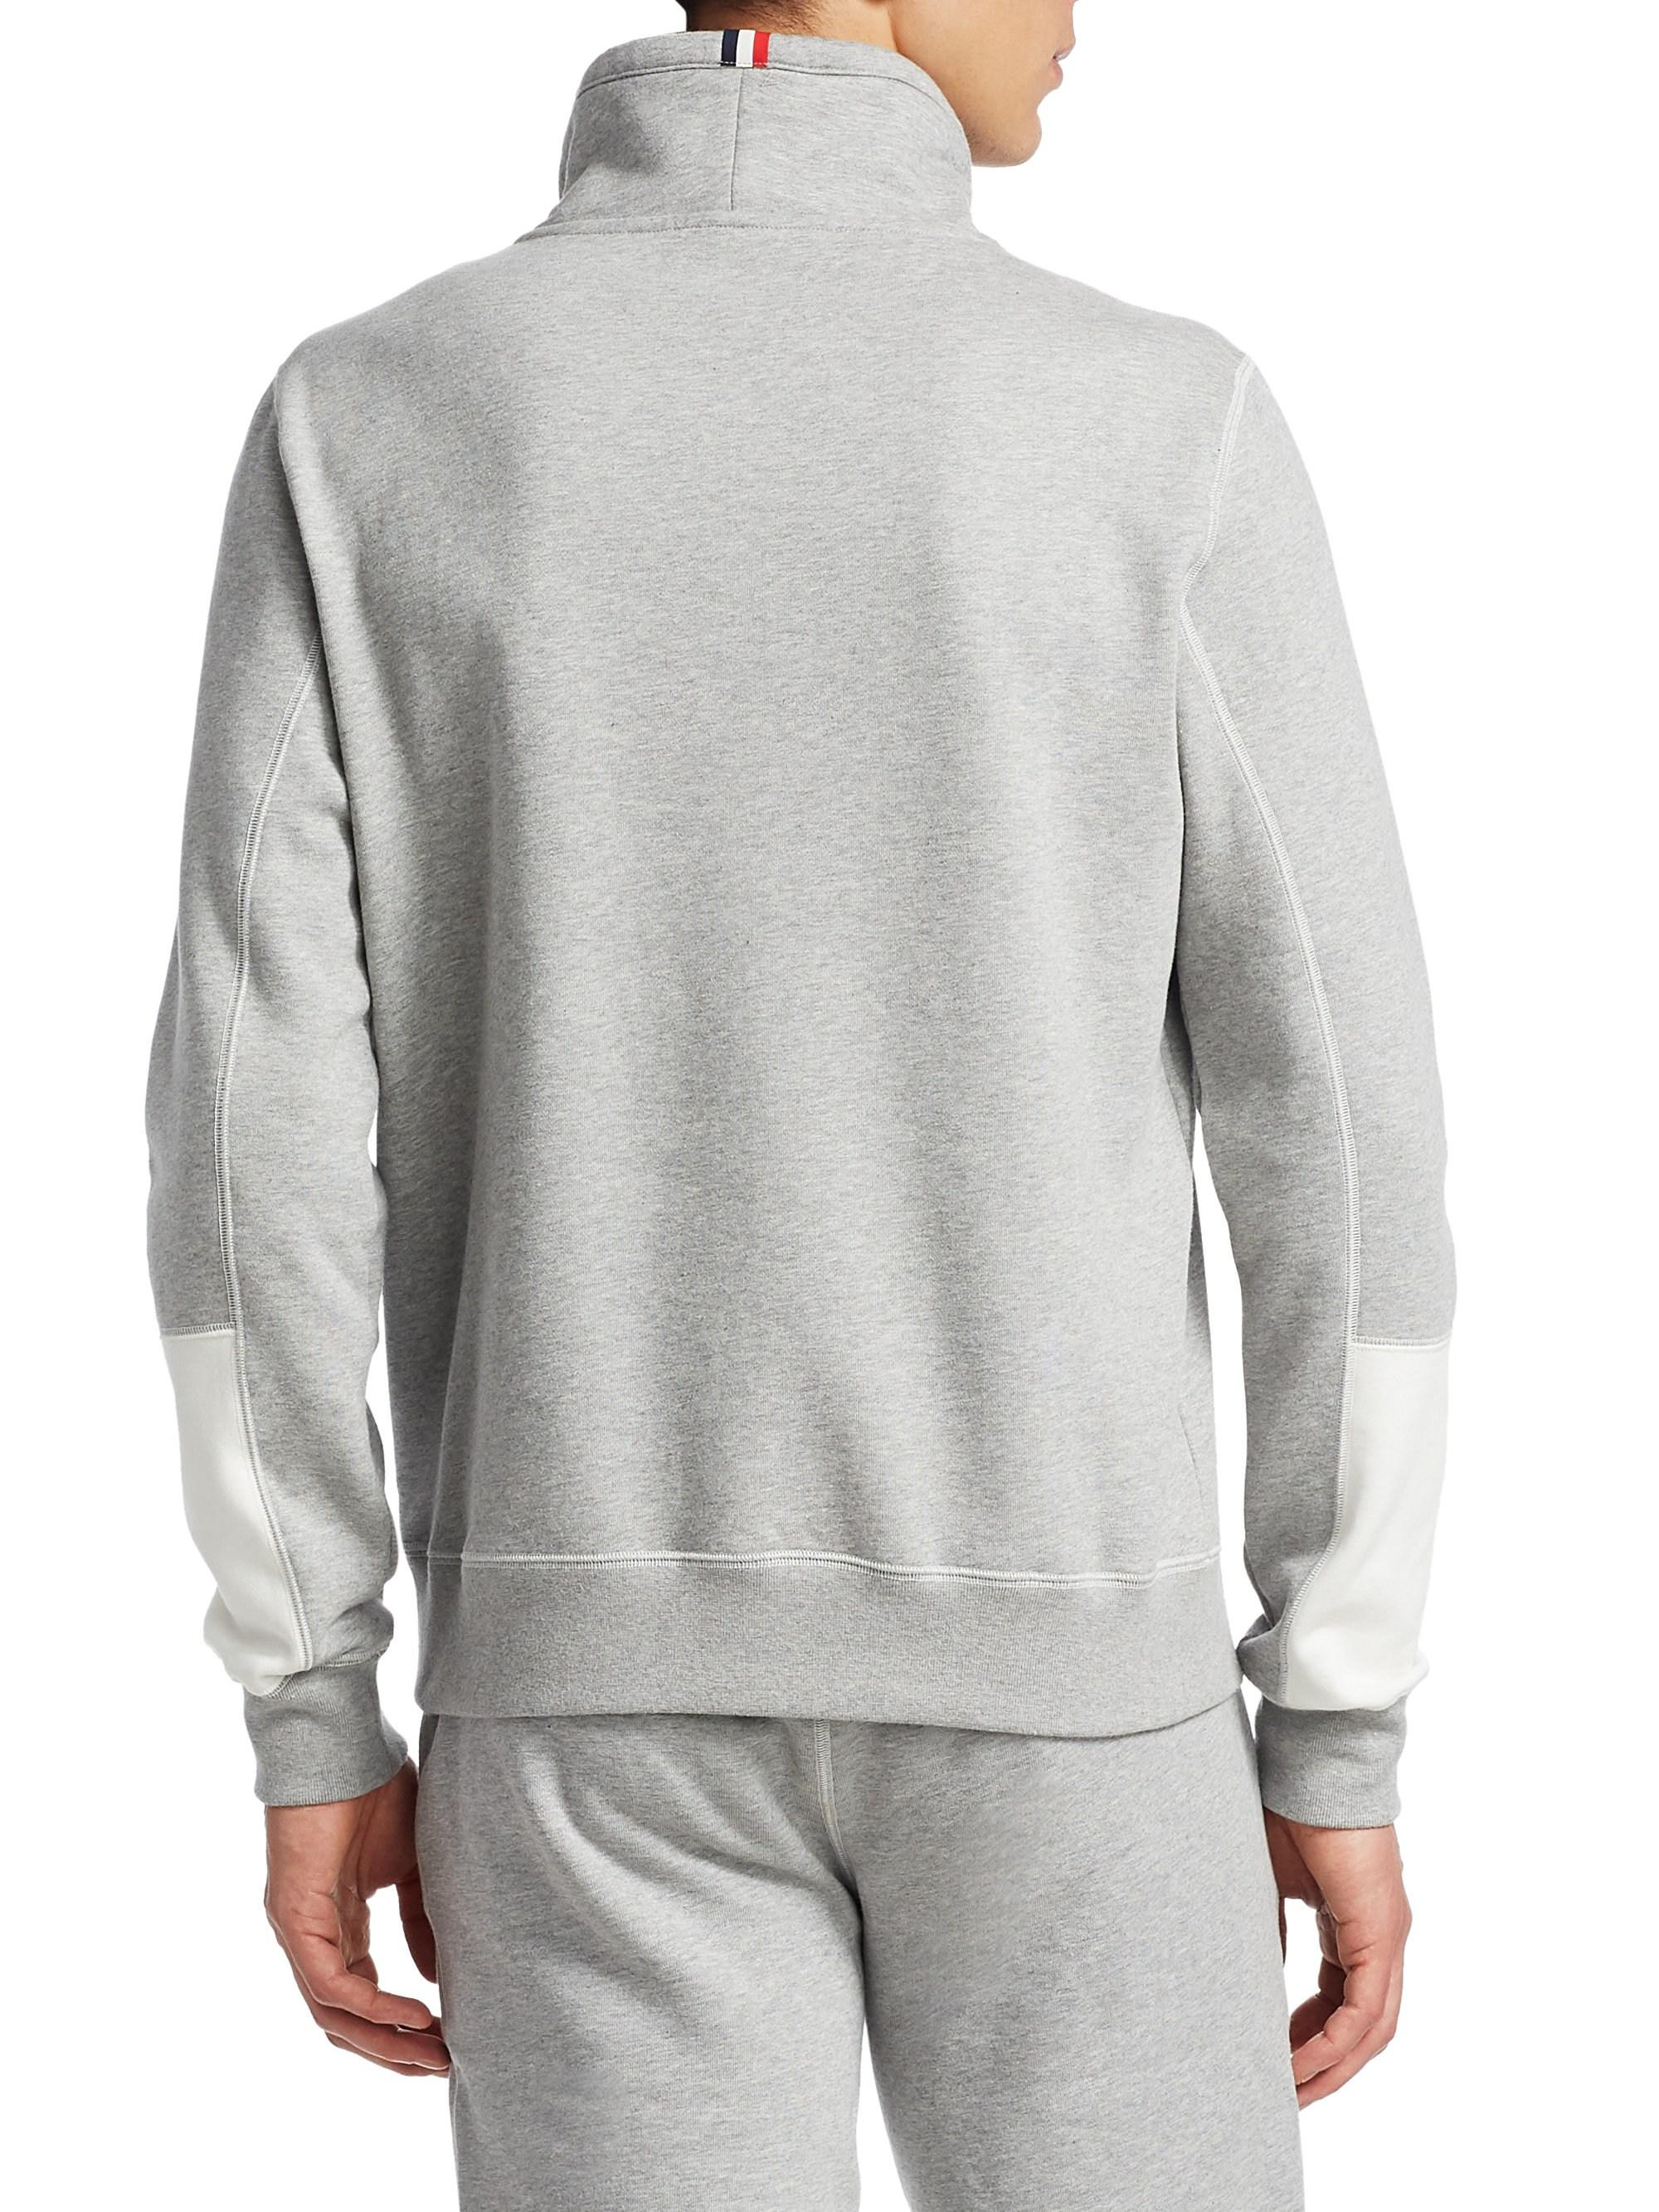 Moncler Maglia Girocollo Cotton Sweatshirt in Light Grey (Gray) for Men -  Lyst